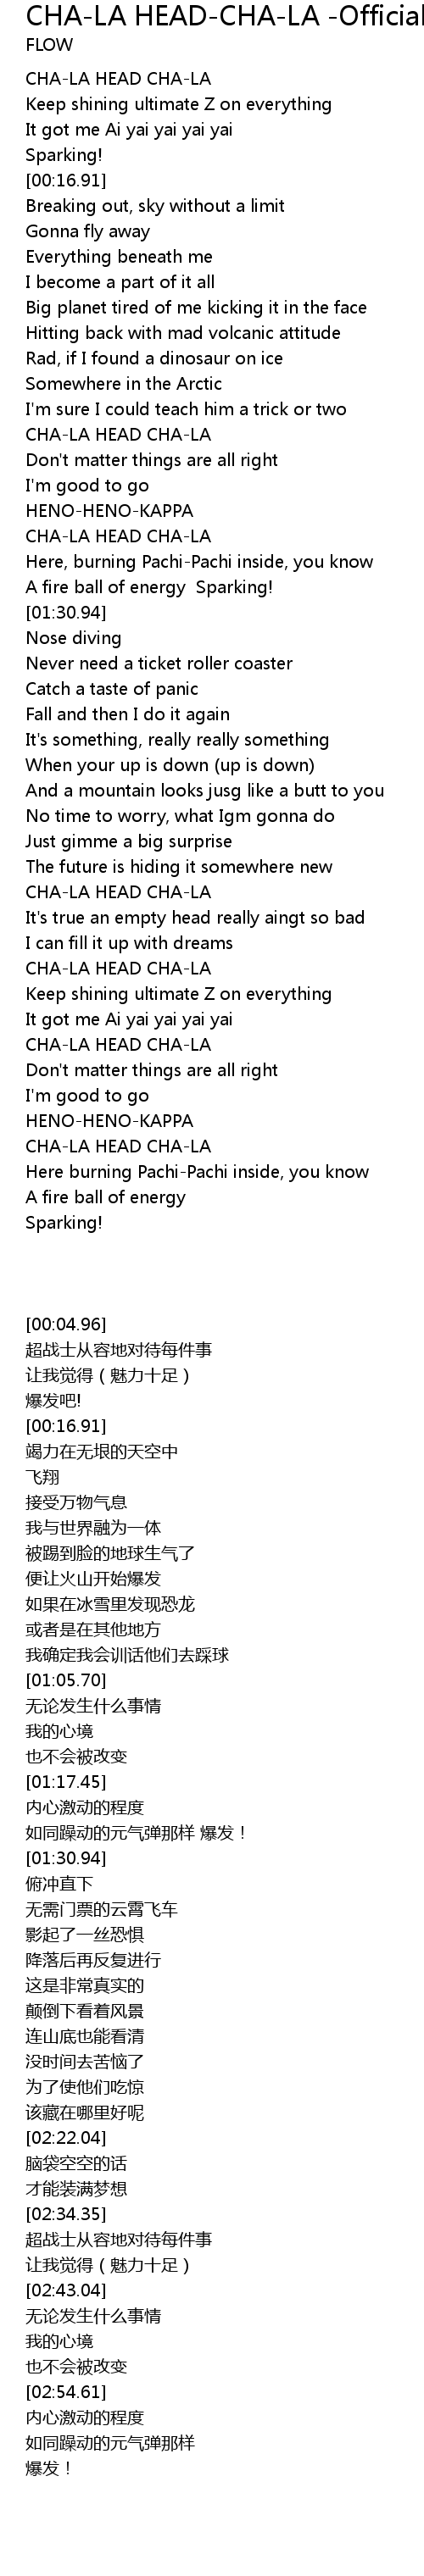 Cha La Head Cha La Official English Ver Lyrics Follow Lyrics